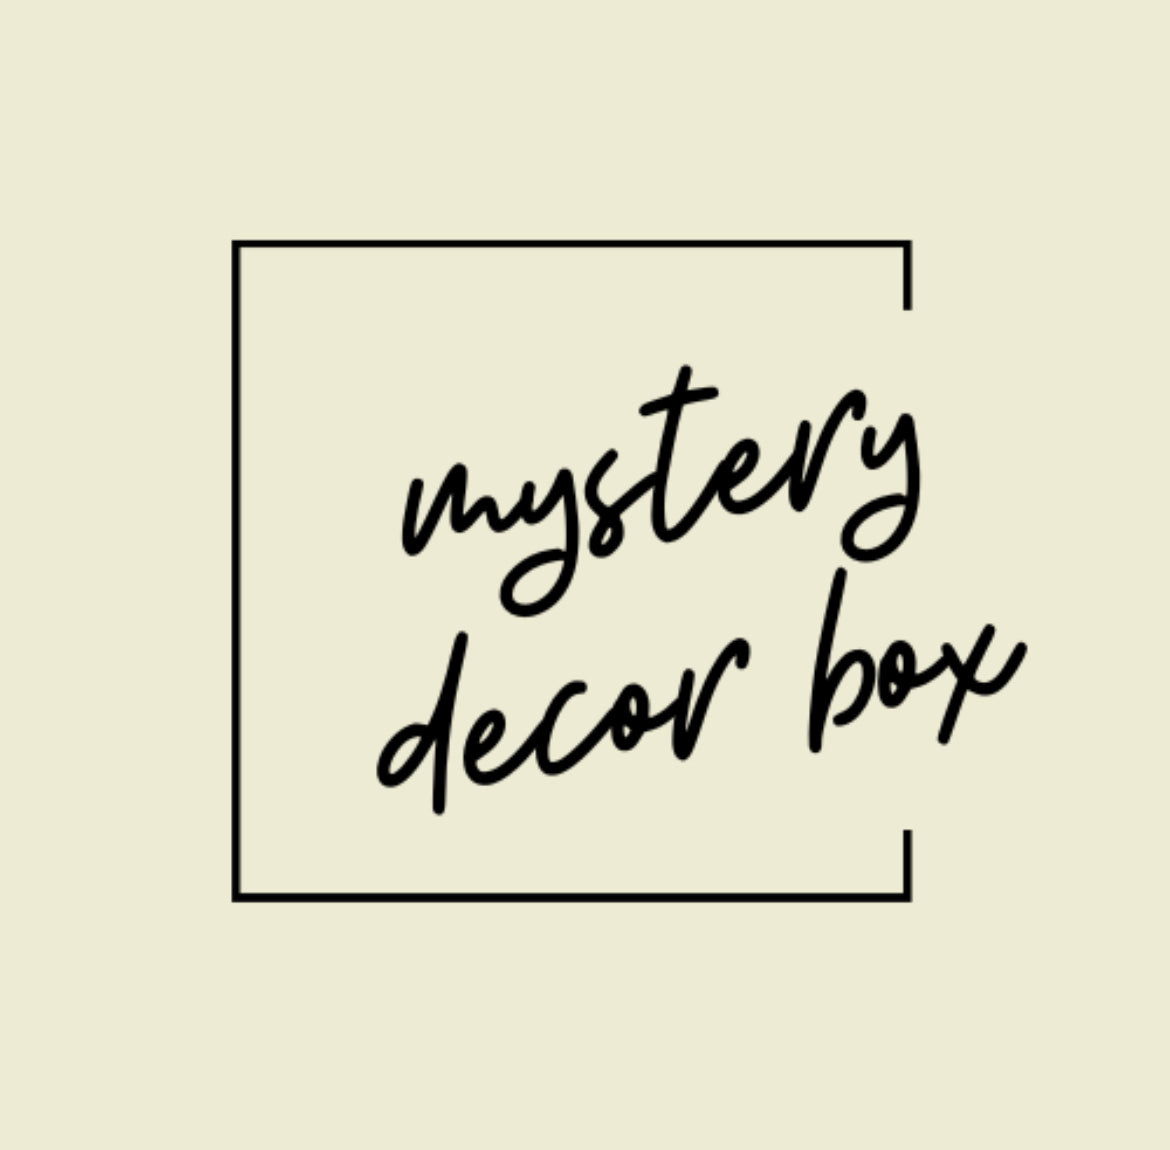 Mystery Decor Box